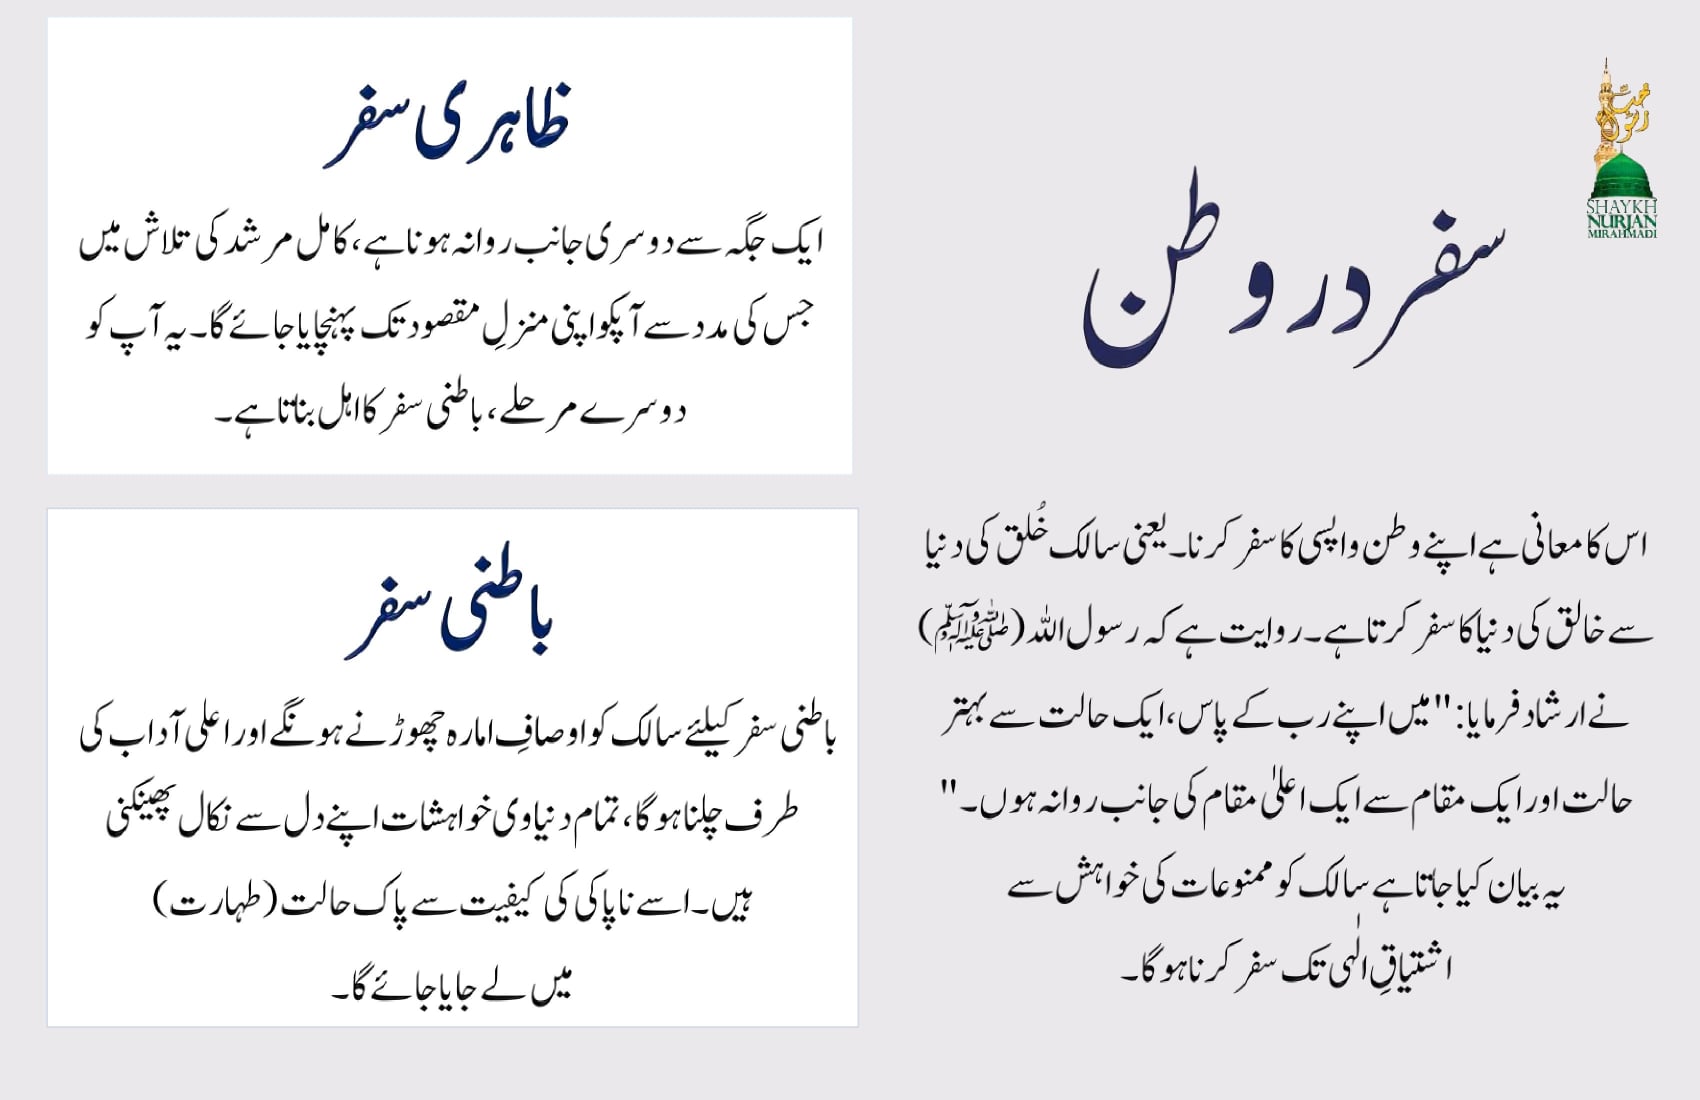 Evade Meaning In Urdu, Bachna بچنا